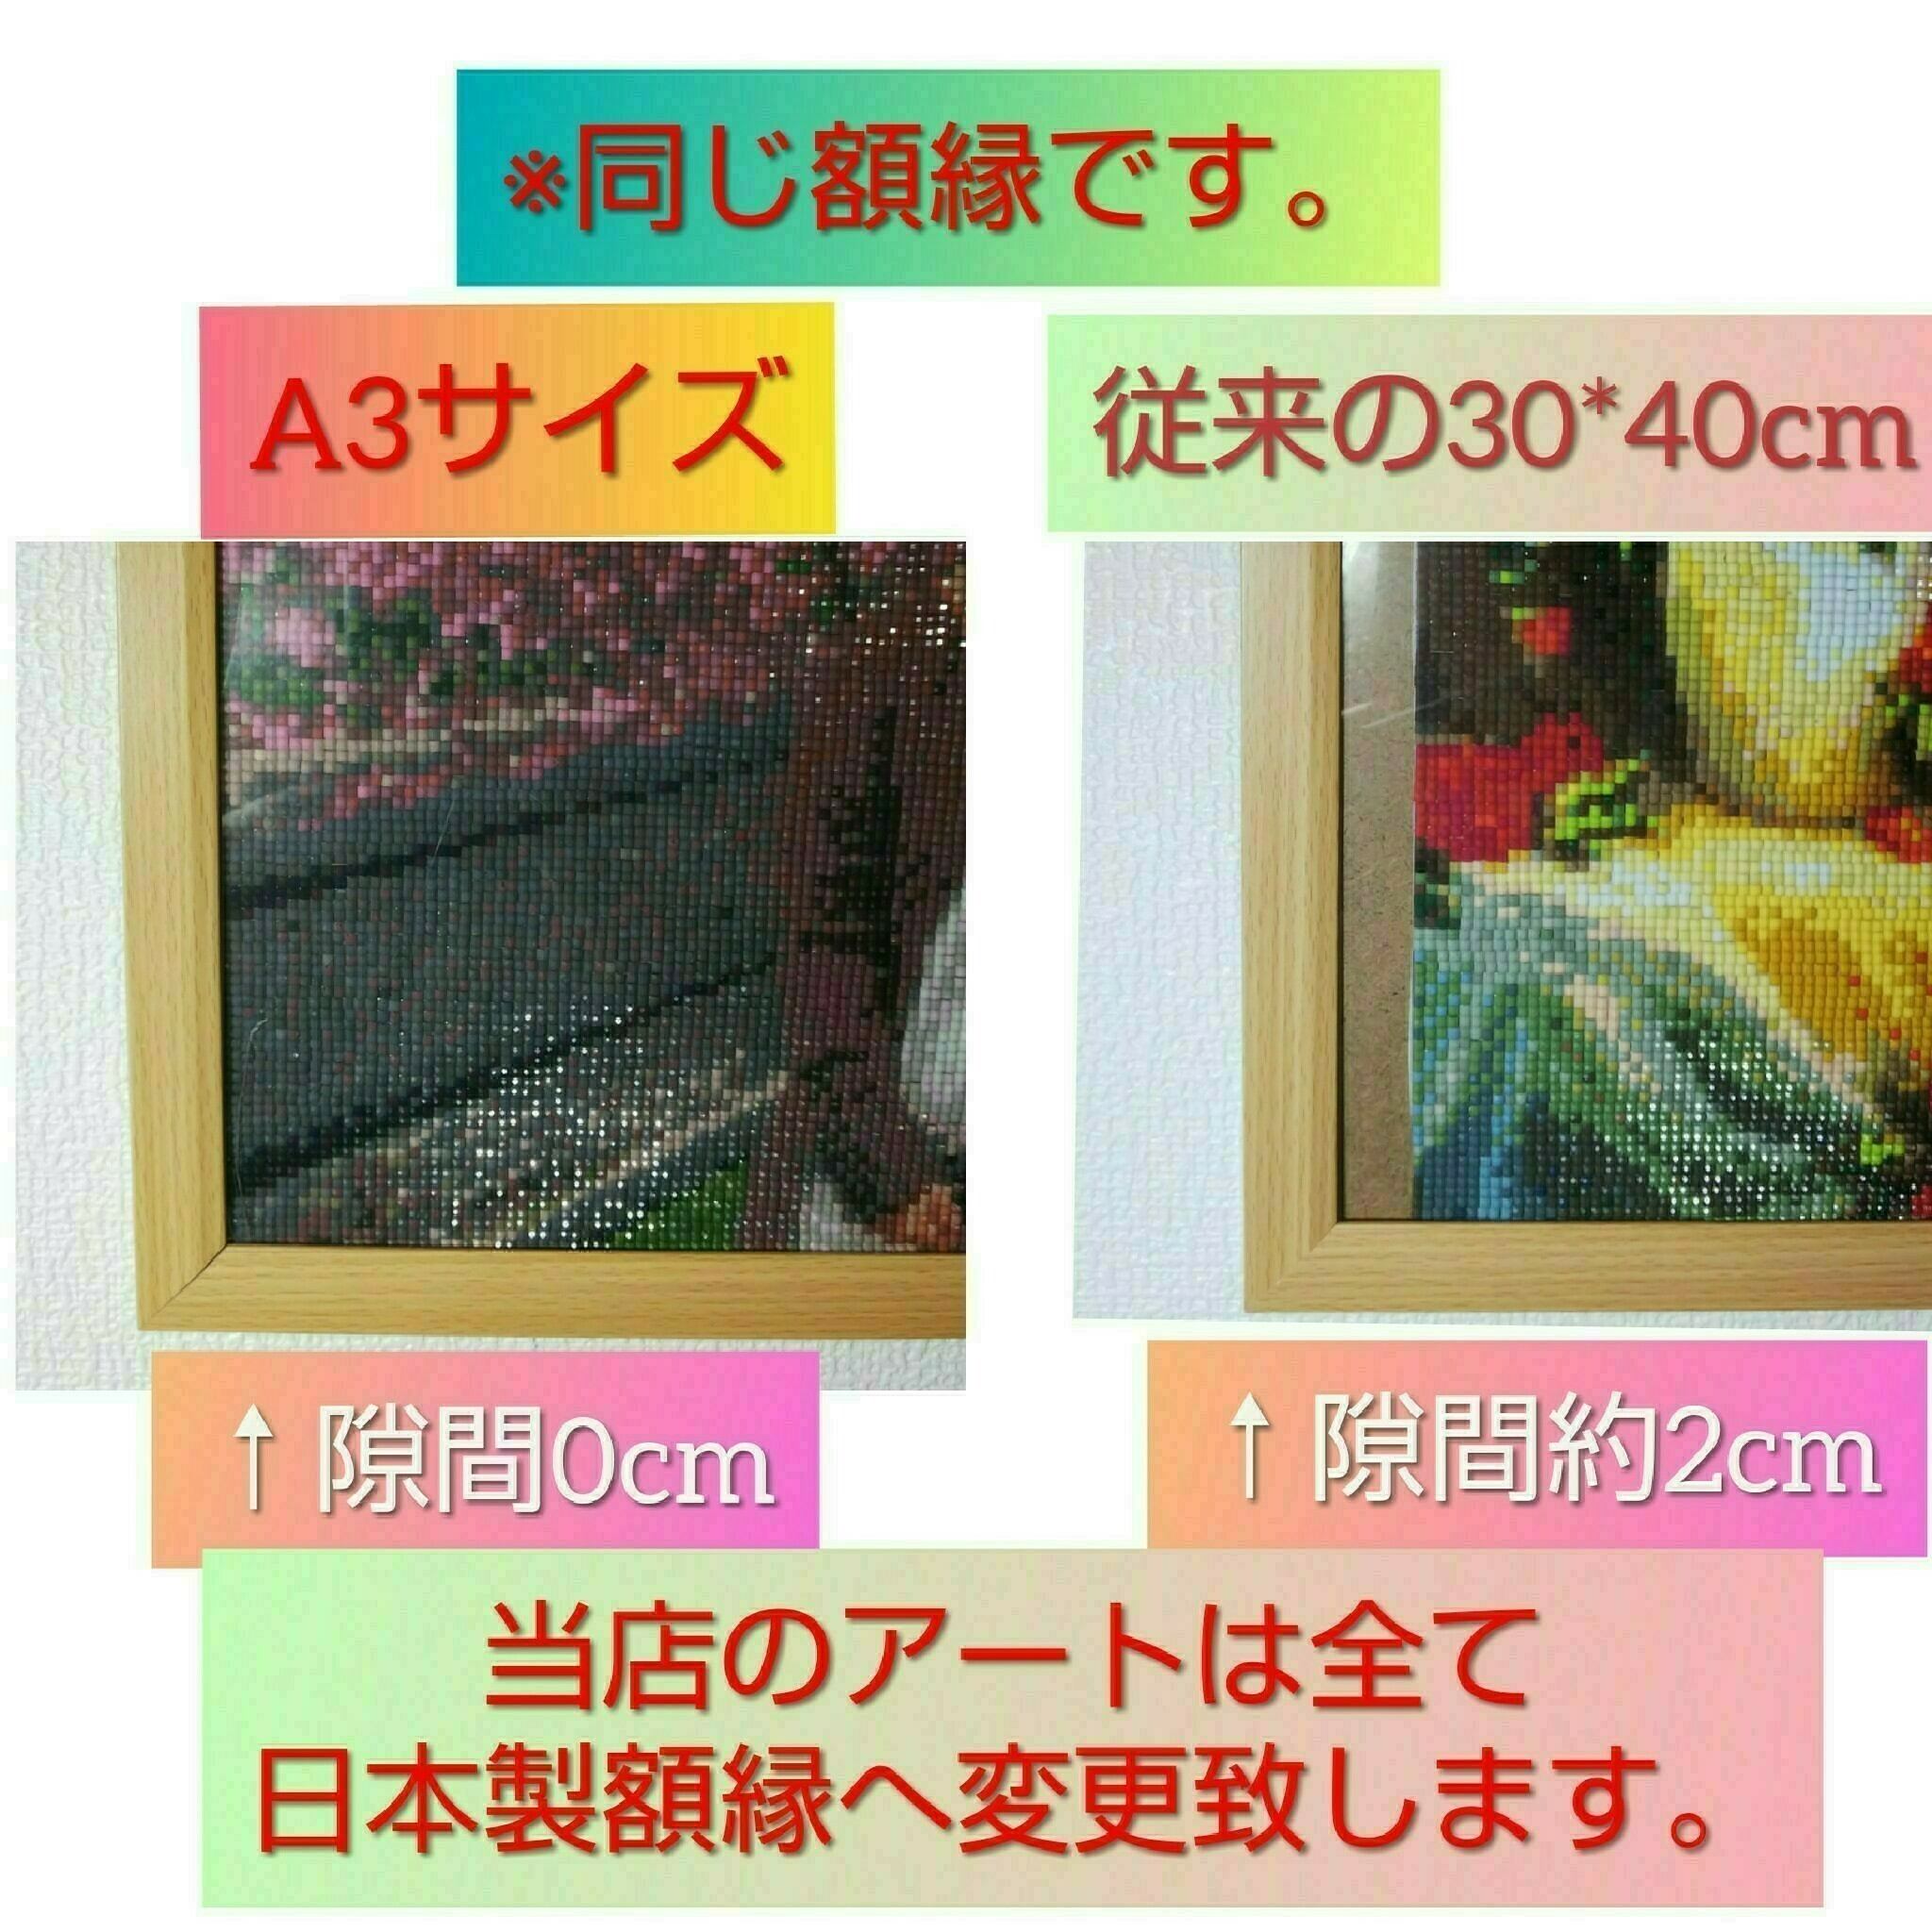 A3サイズ 四角ビーズ【runa-576】ダイヤモンドアート